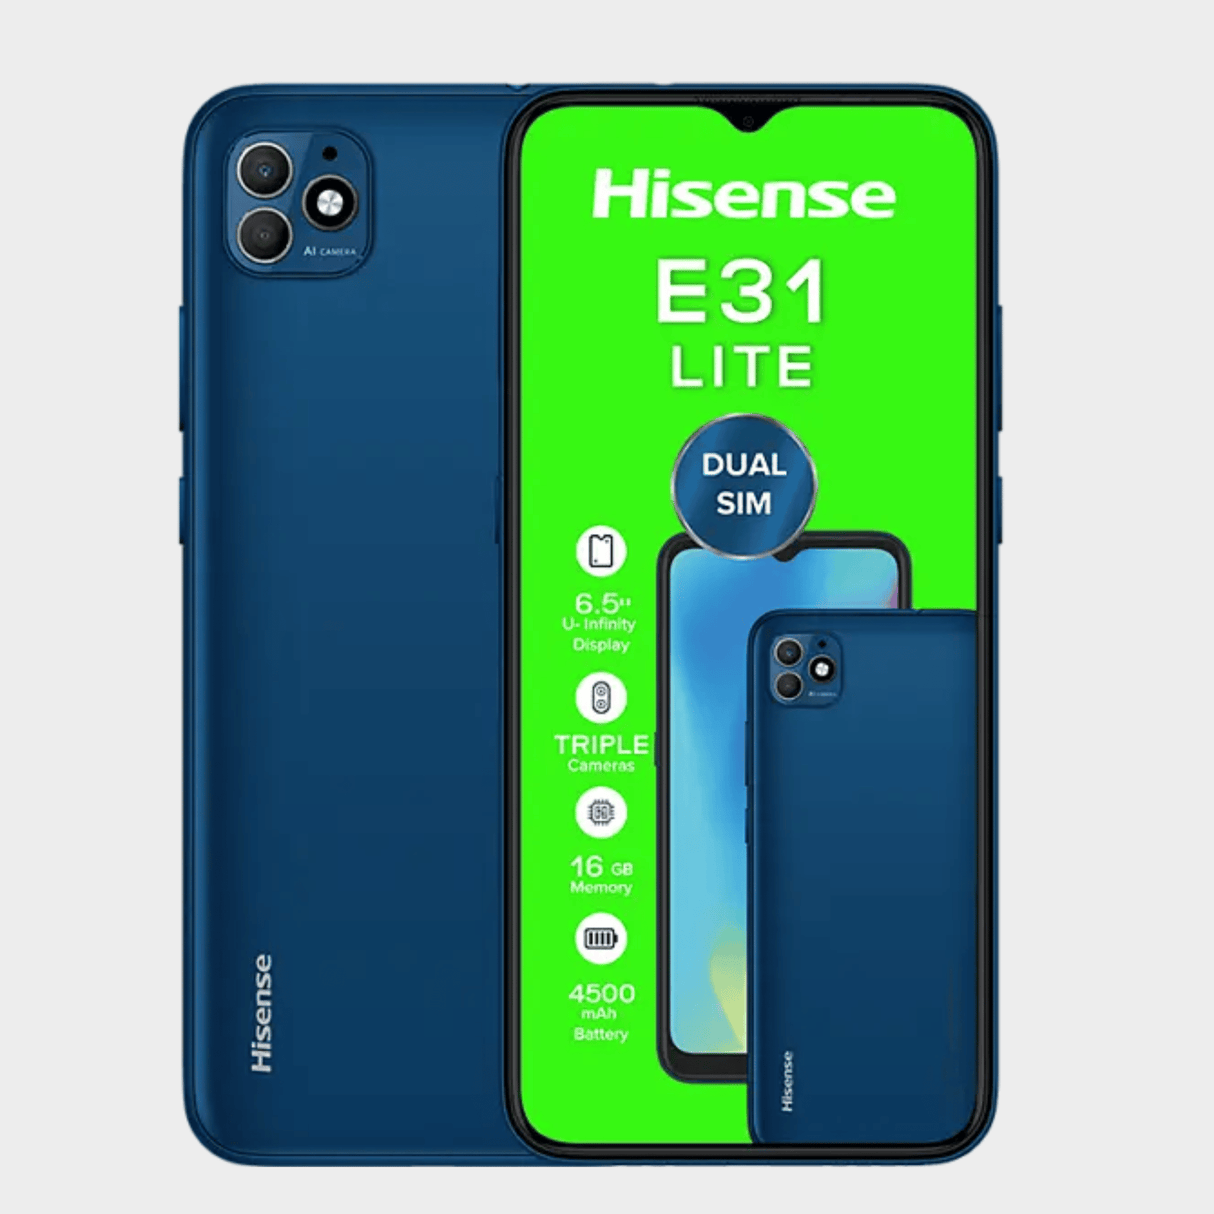 Hisense Infinity 6.52" Display Smart Phone,  1GB RAM and 16GB expandable storage, 4500mAh battery - E31 Lite